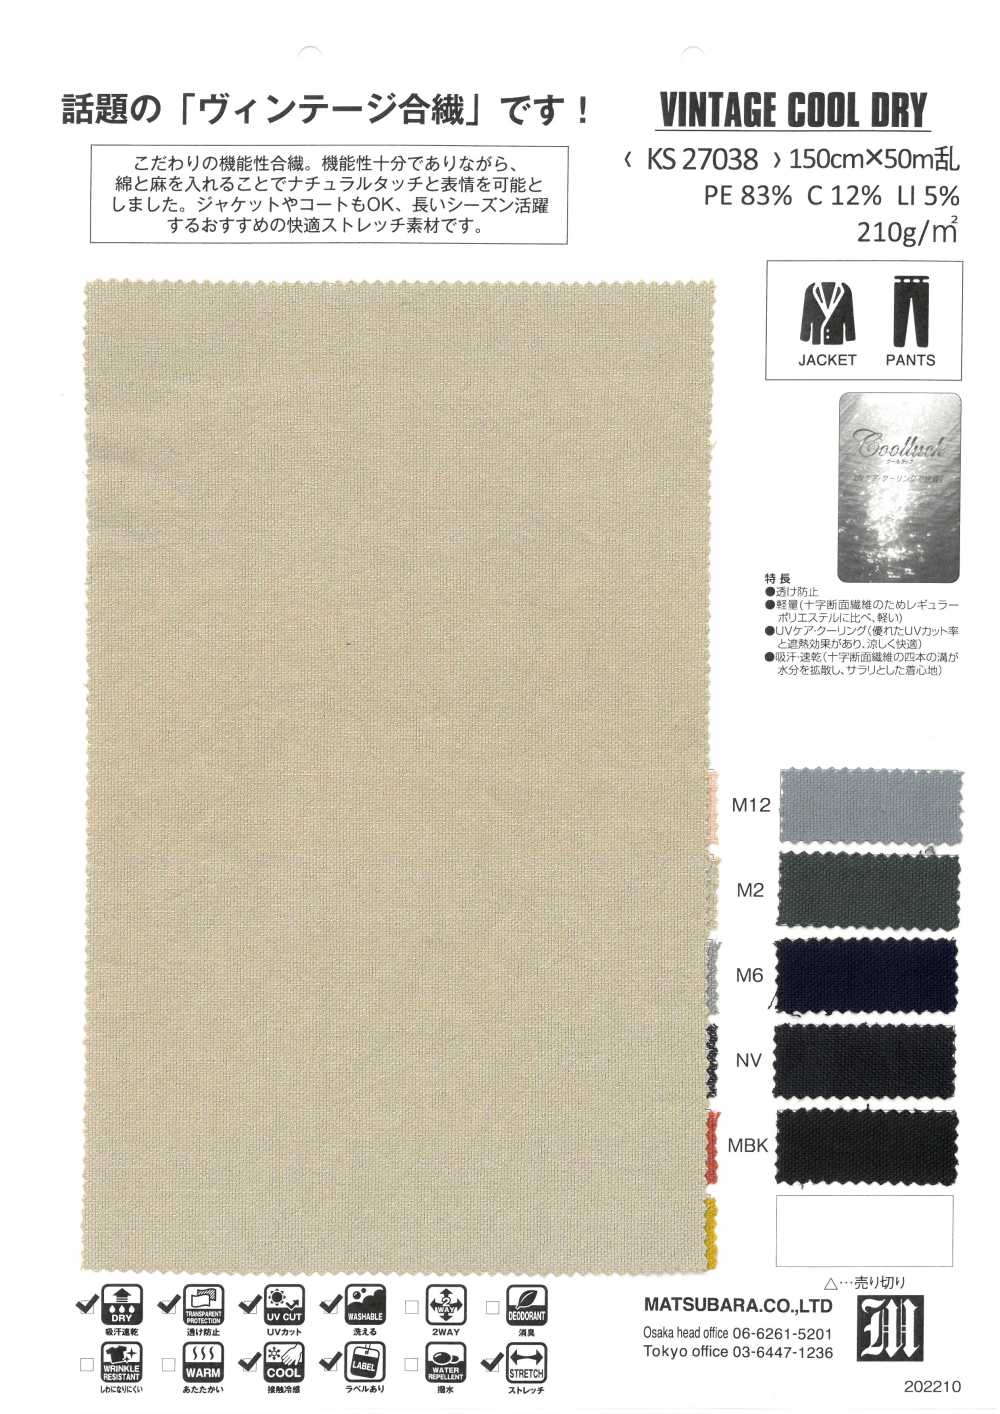 KS27038 VINTAGE FRAIS SEC[Fabrication De Textile] Matsubara